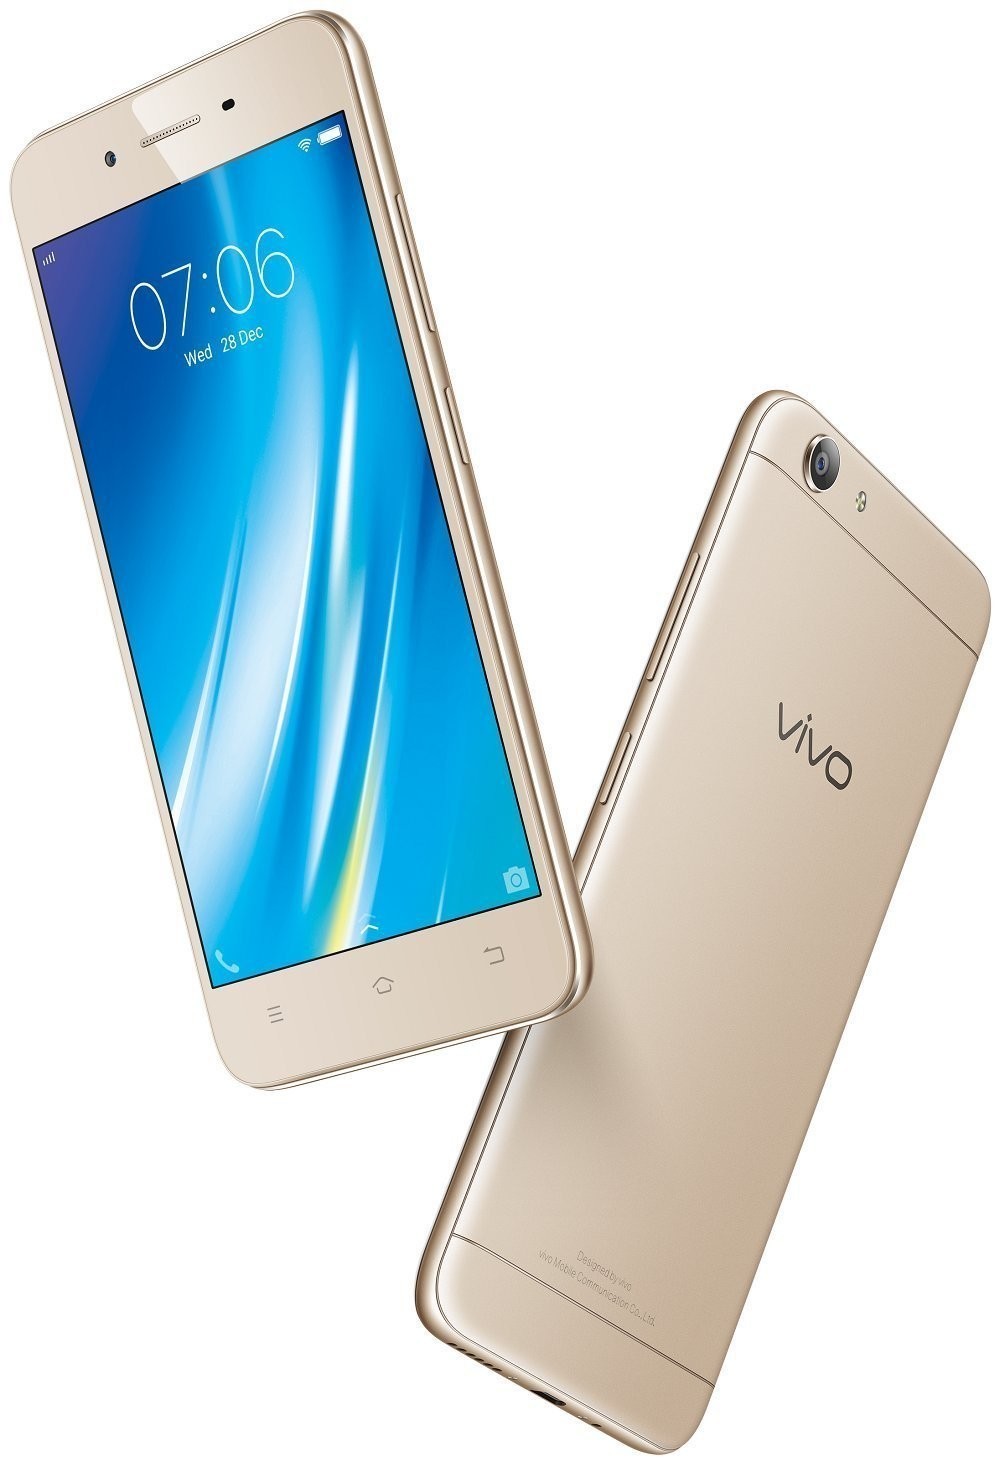 Vivo Y53 - Specs and Price - Phonegg